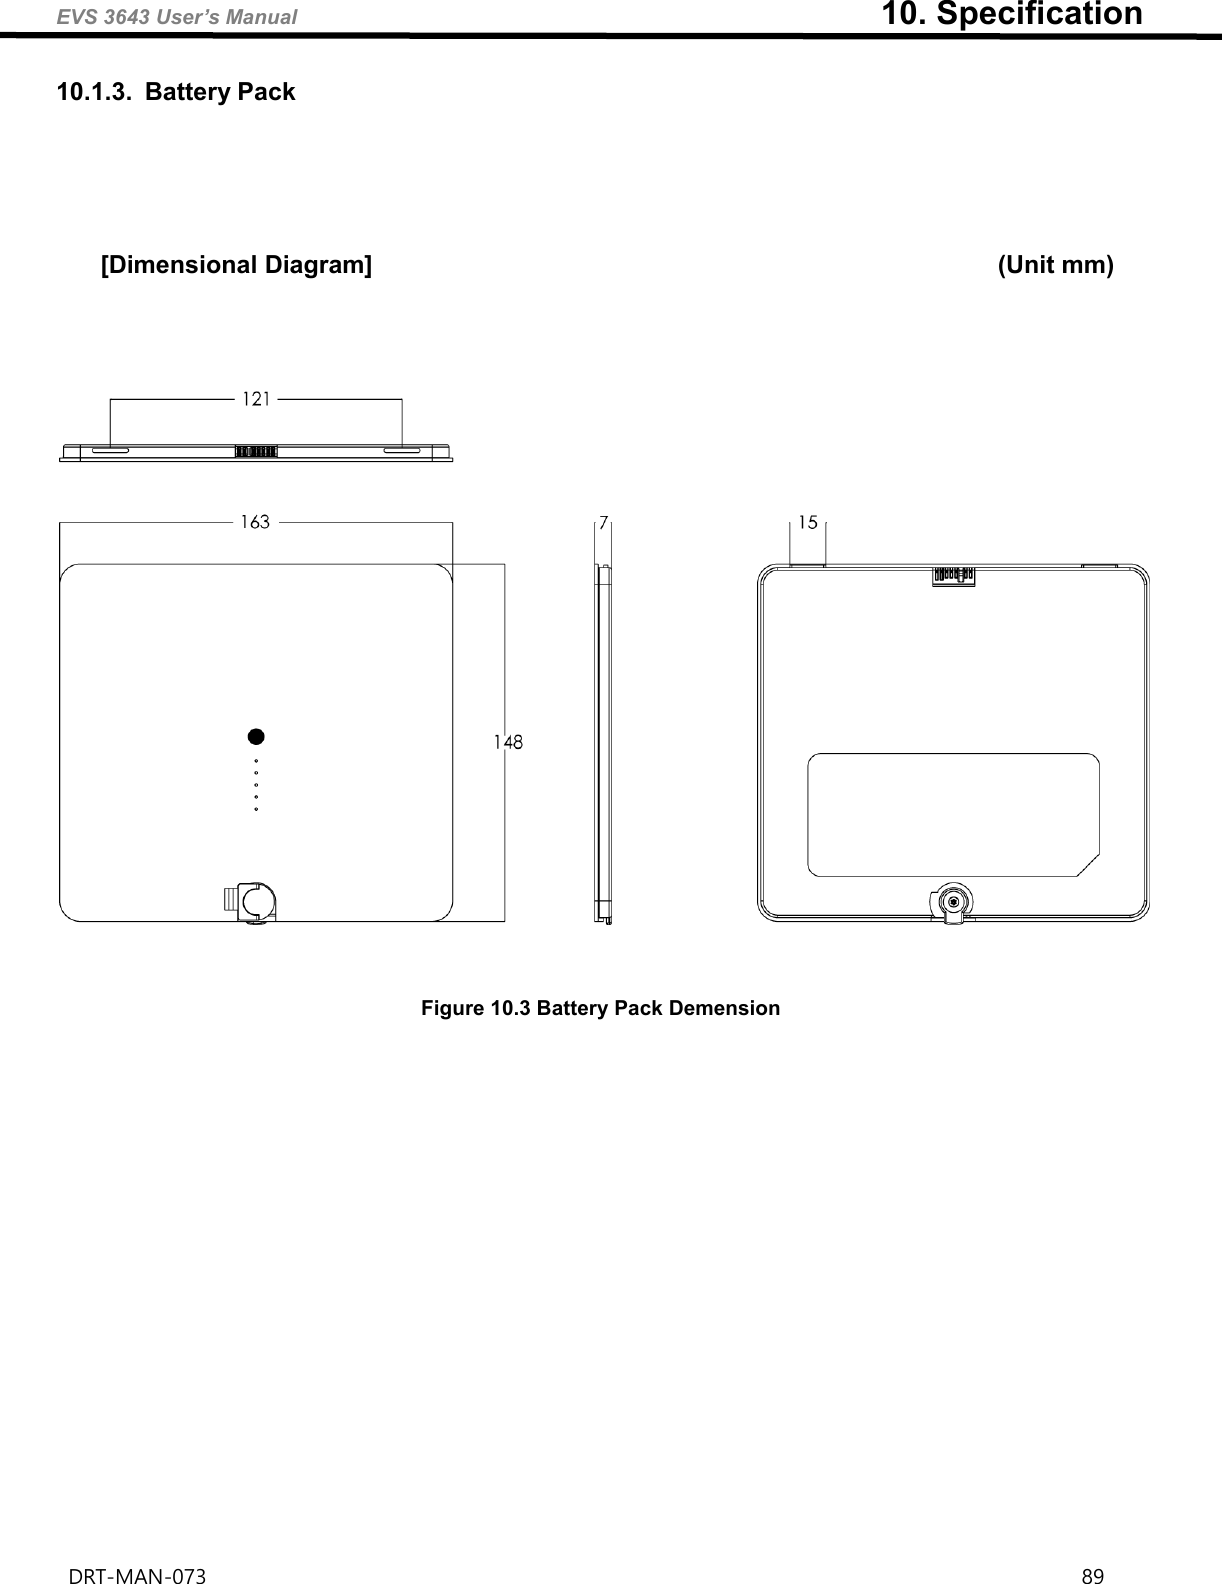 EVS 3643 User’s Manual                                                                      10. Specification DRT-MAN-073                                                                                                                                                                89   10.1.3.  Battery Pack      [Dimensional Diagram]                                                                           (Unit mm)         Figure 10.3 Battery Pack Demension     